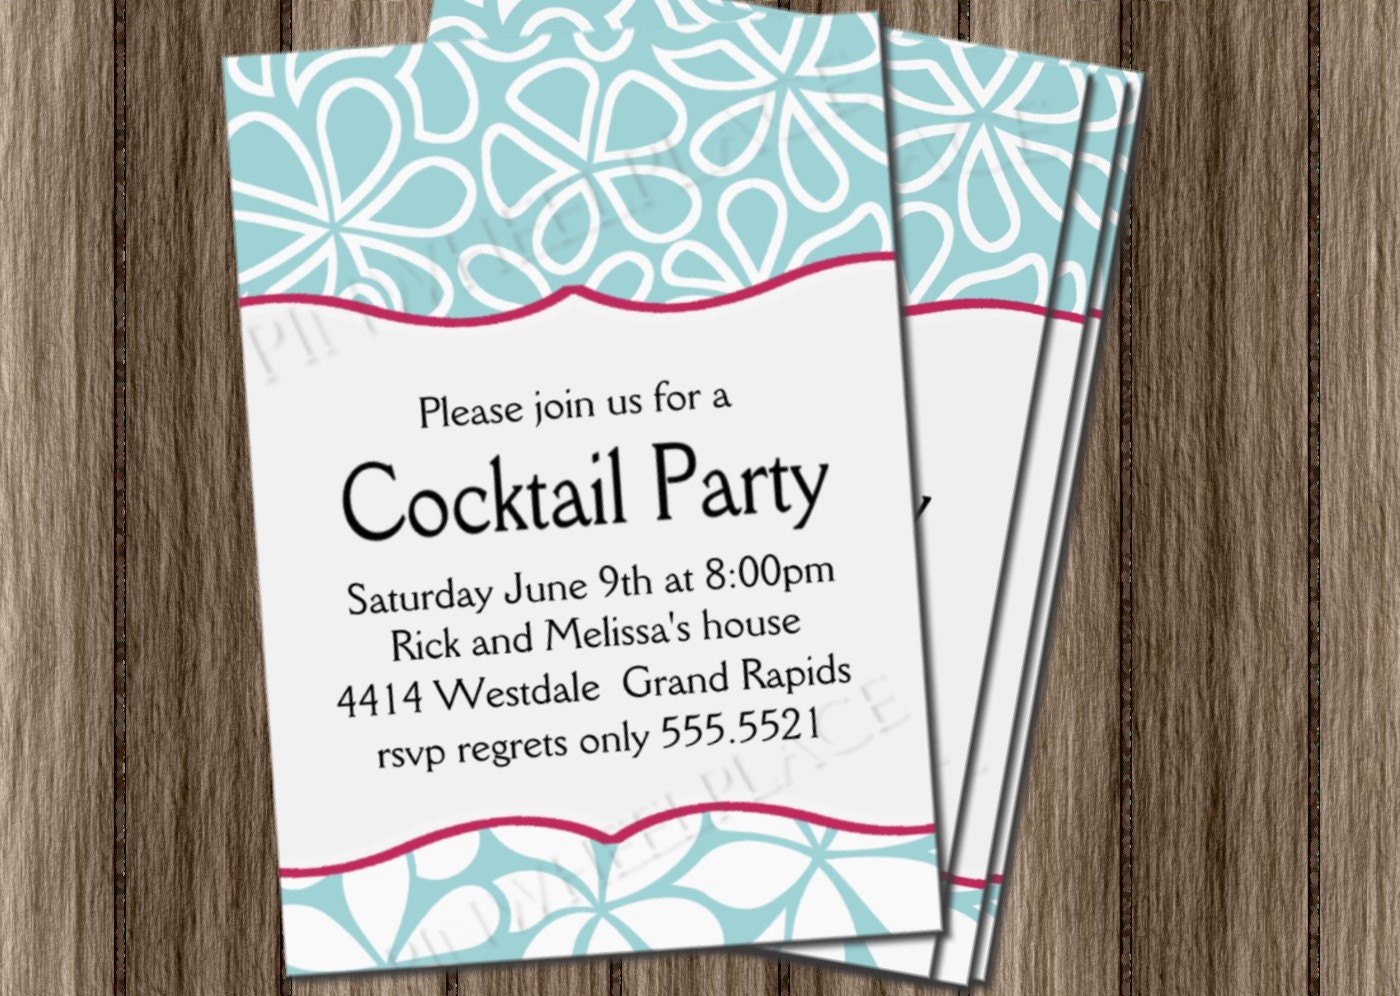 ... .com/invitation/cupcakes-amp-cocktails-party-invitations-6059